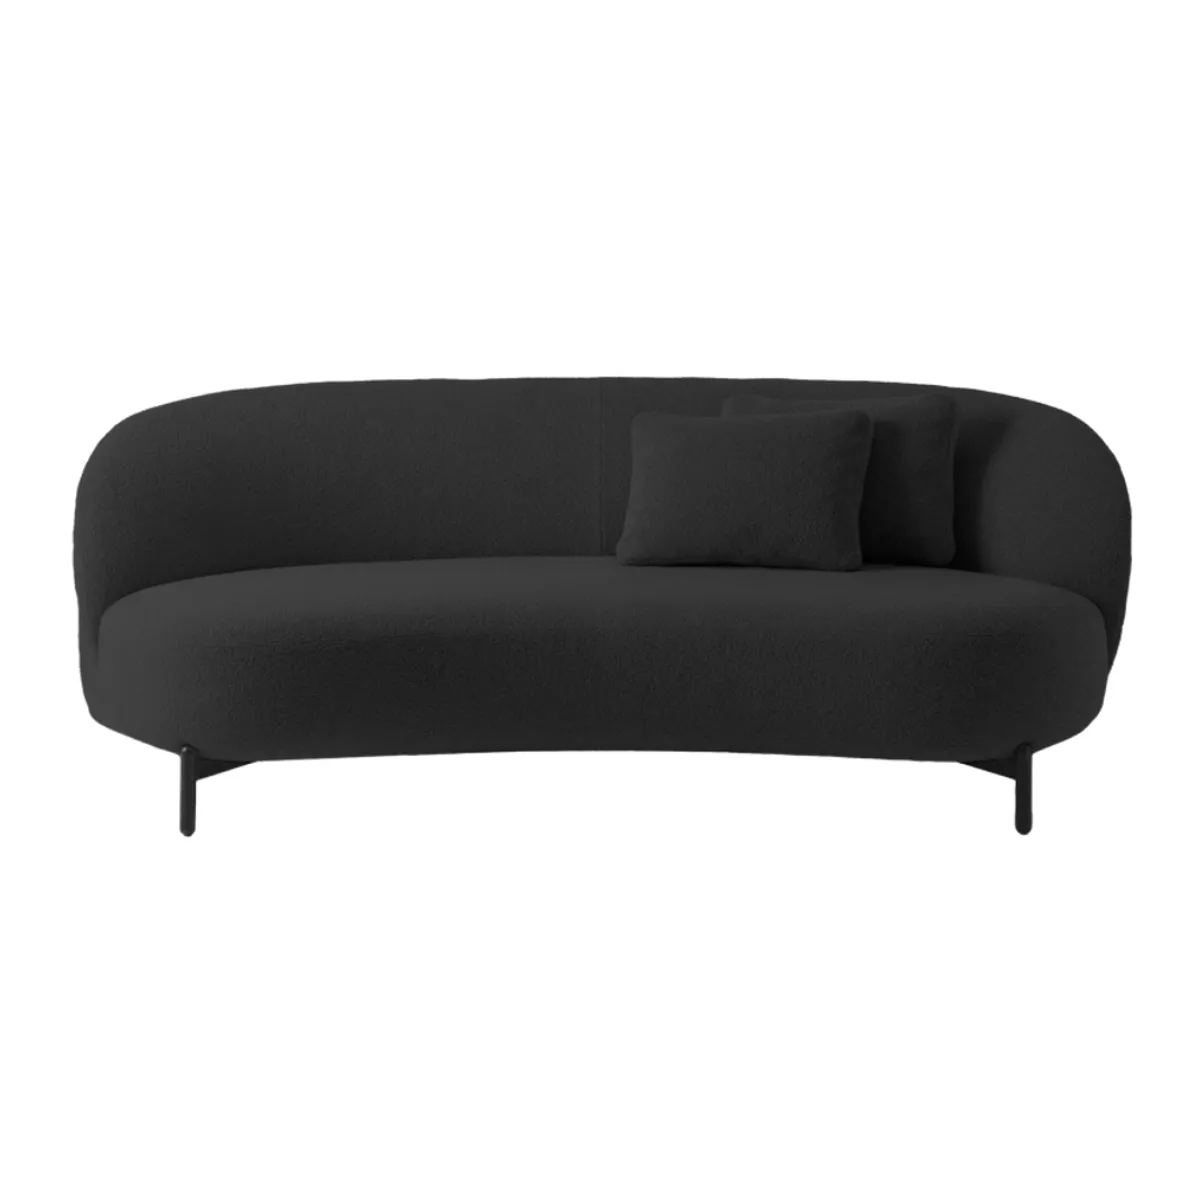 Kingsley sofa 9